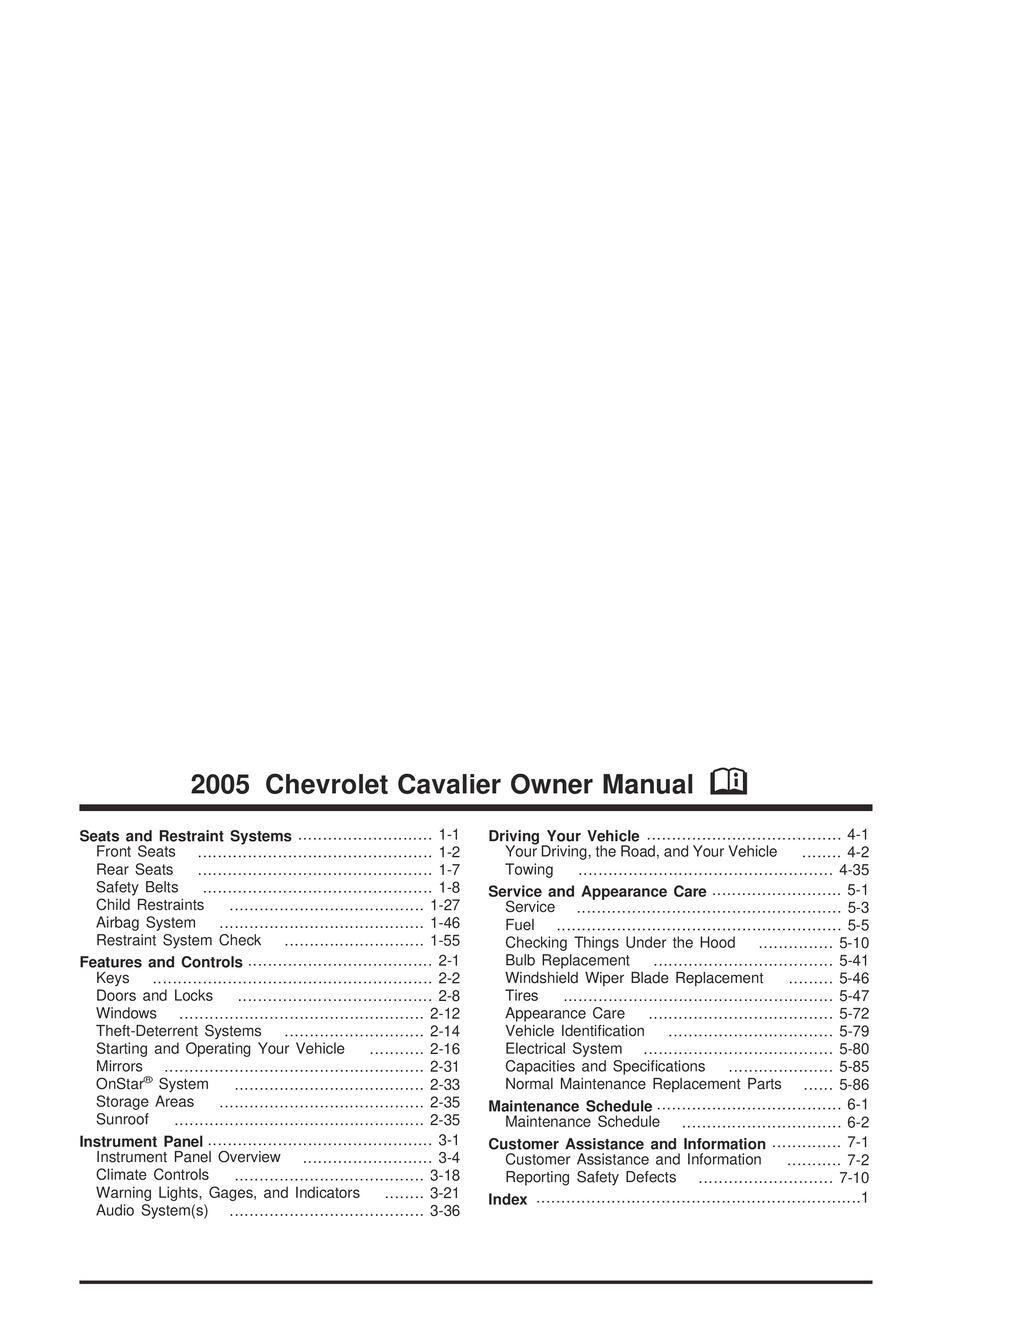 2005 Chevrolet Cavalier Owner's Manual